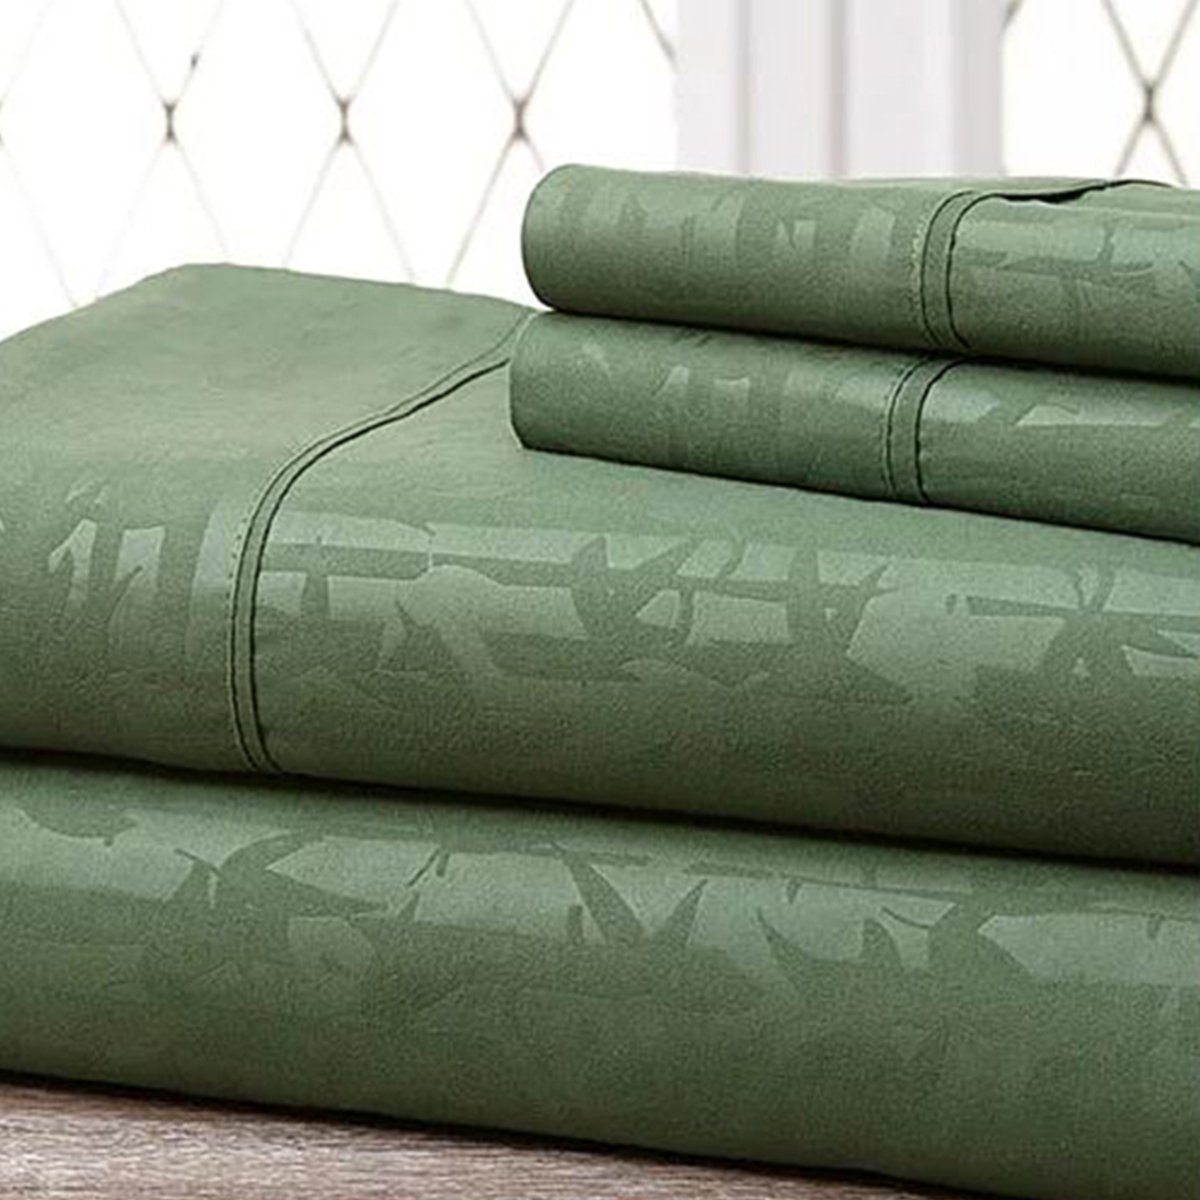 Hny-4pc-eb-hun-f Super-soft 1600 Series Bamboo Embossed Bed Sheet, Hunter Green - Full, 4 Piece